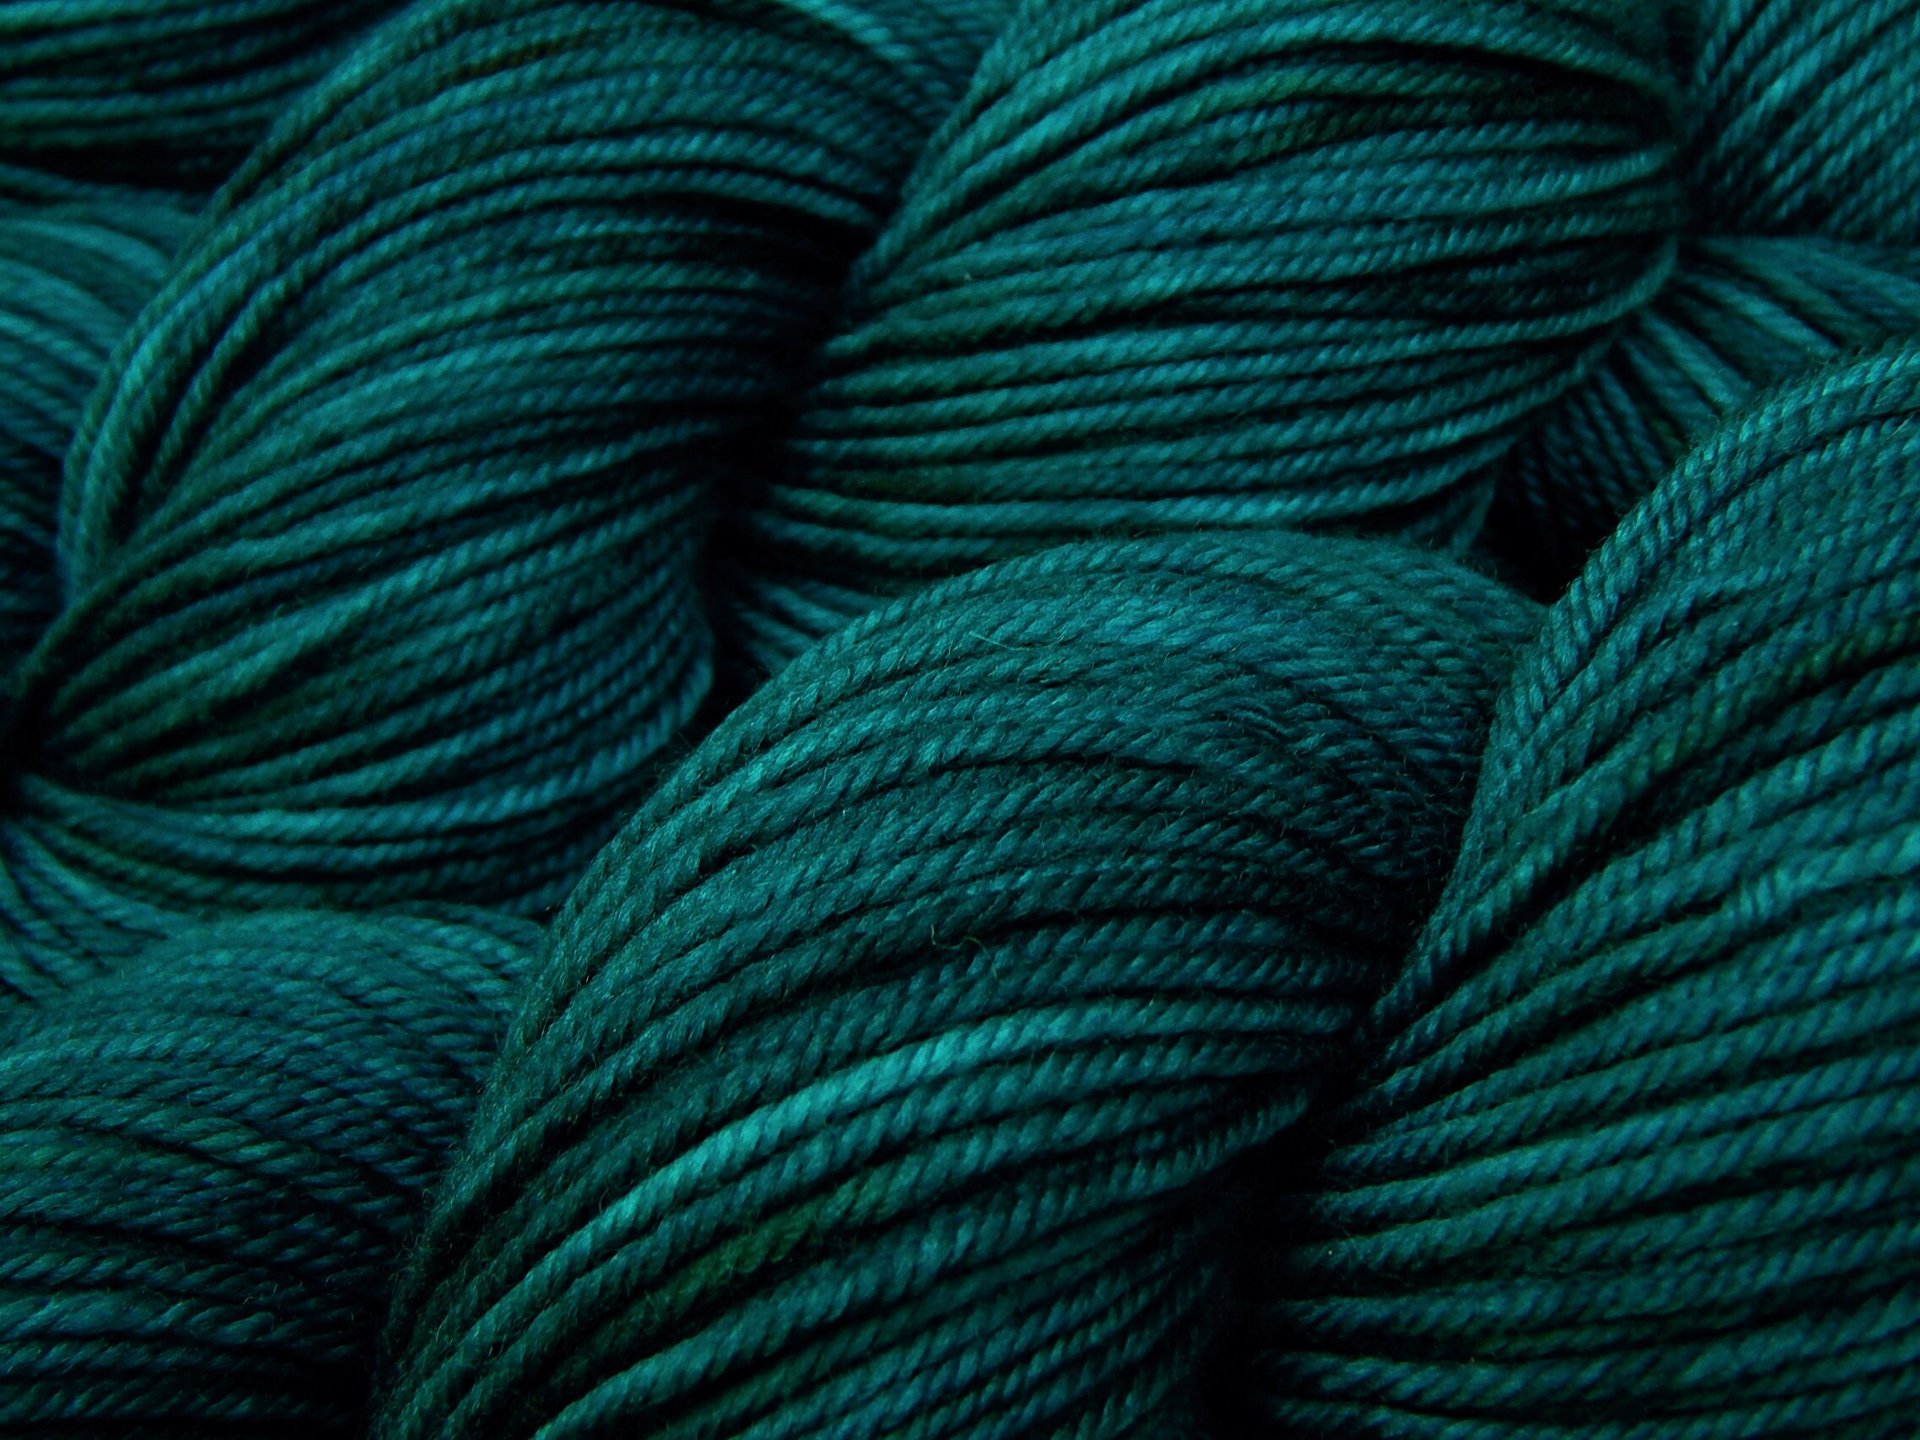 Hand Dyed Yarn, DK Weight Superwash Merino Wool - Deep Sea Tonal - Teal Indie Dyer Yarn, Vibrant Saturated Blue Green Knitting Crochet Yarn